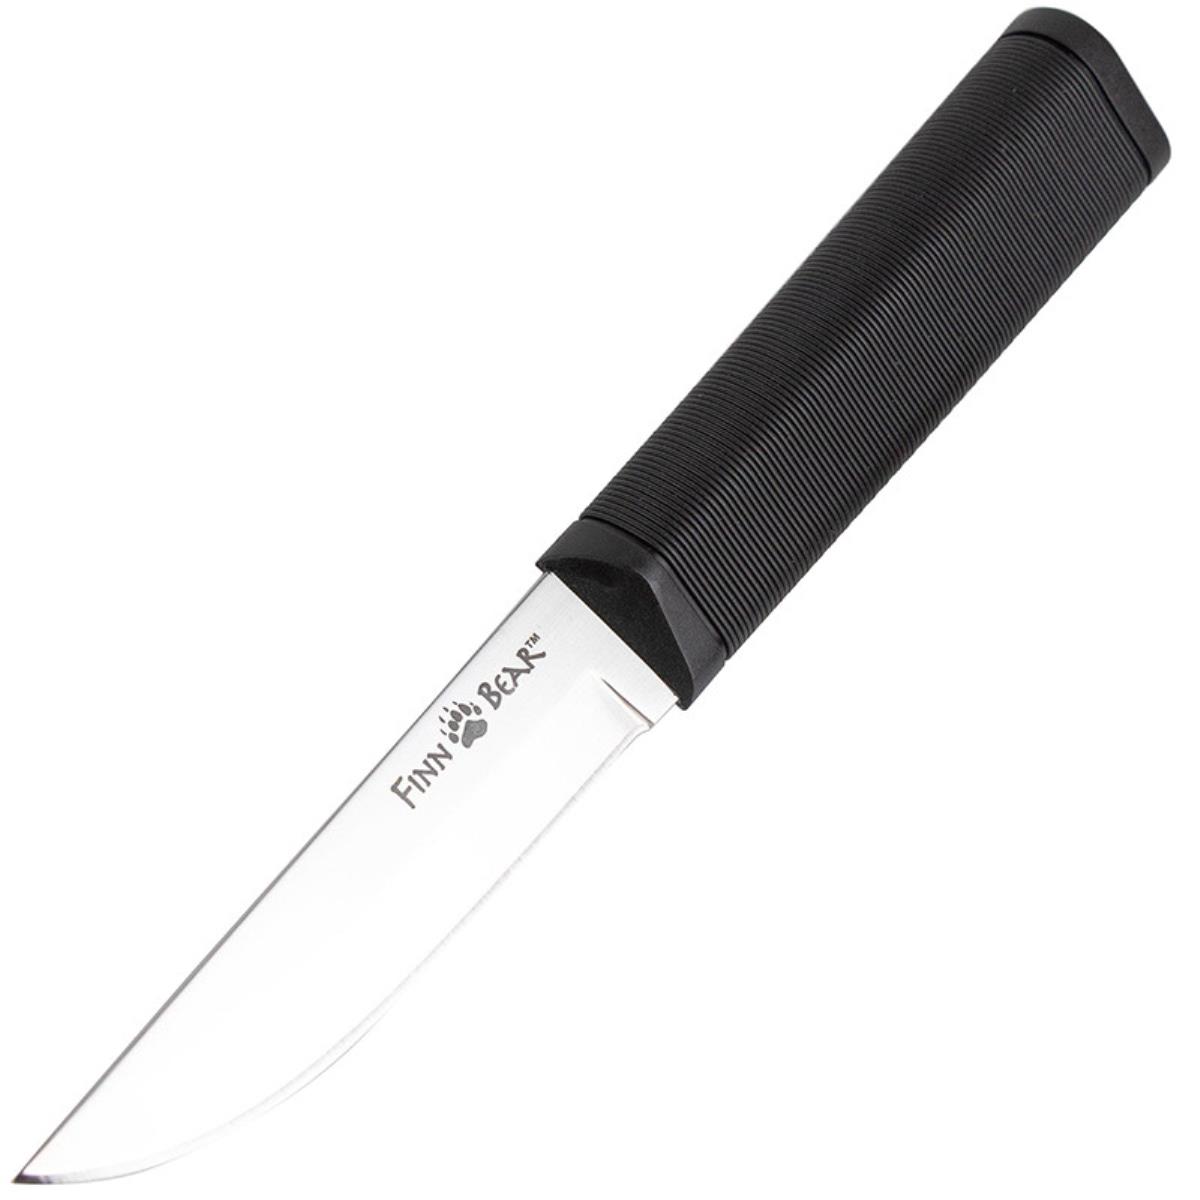 Нож сталь 4116 German, пластиковые ножны 20PC Finn Bear  Cold Steel нож cold steel peace maker iii 20pbs сталь 4116 рукоять резина